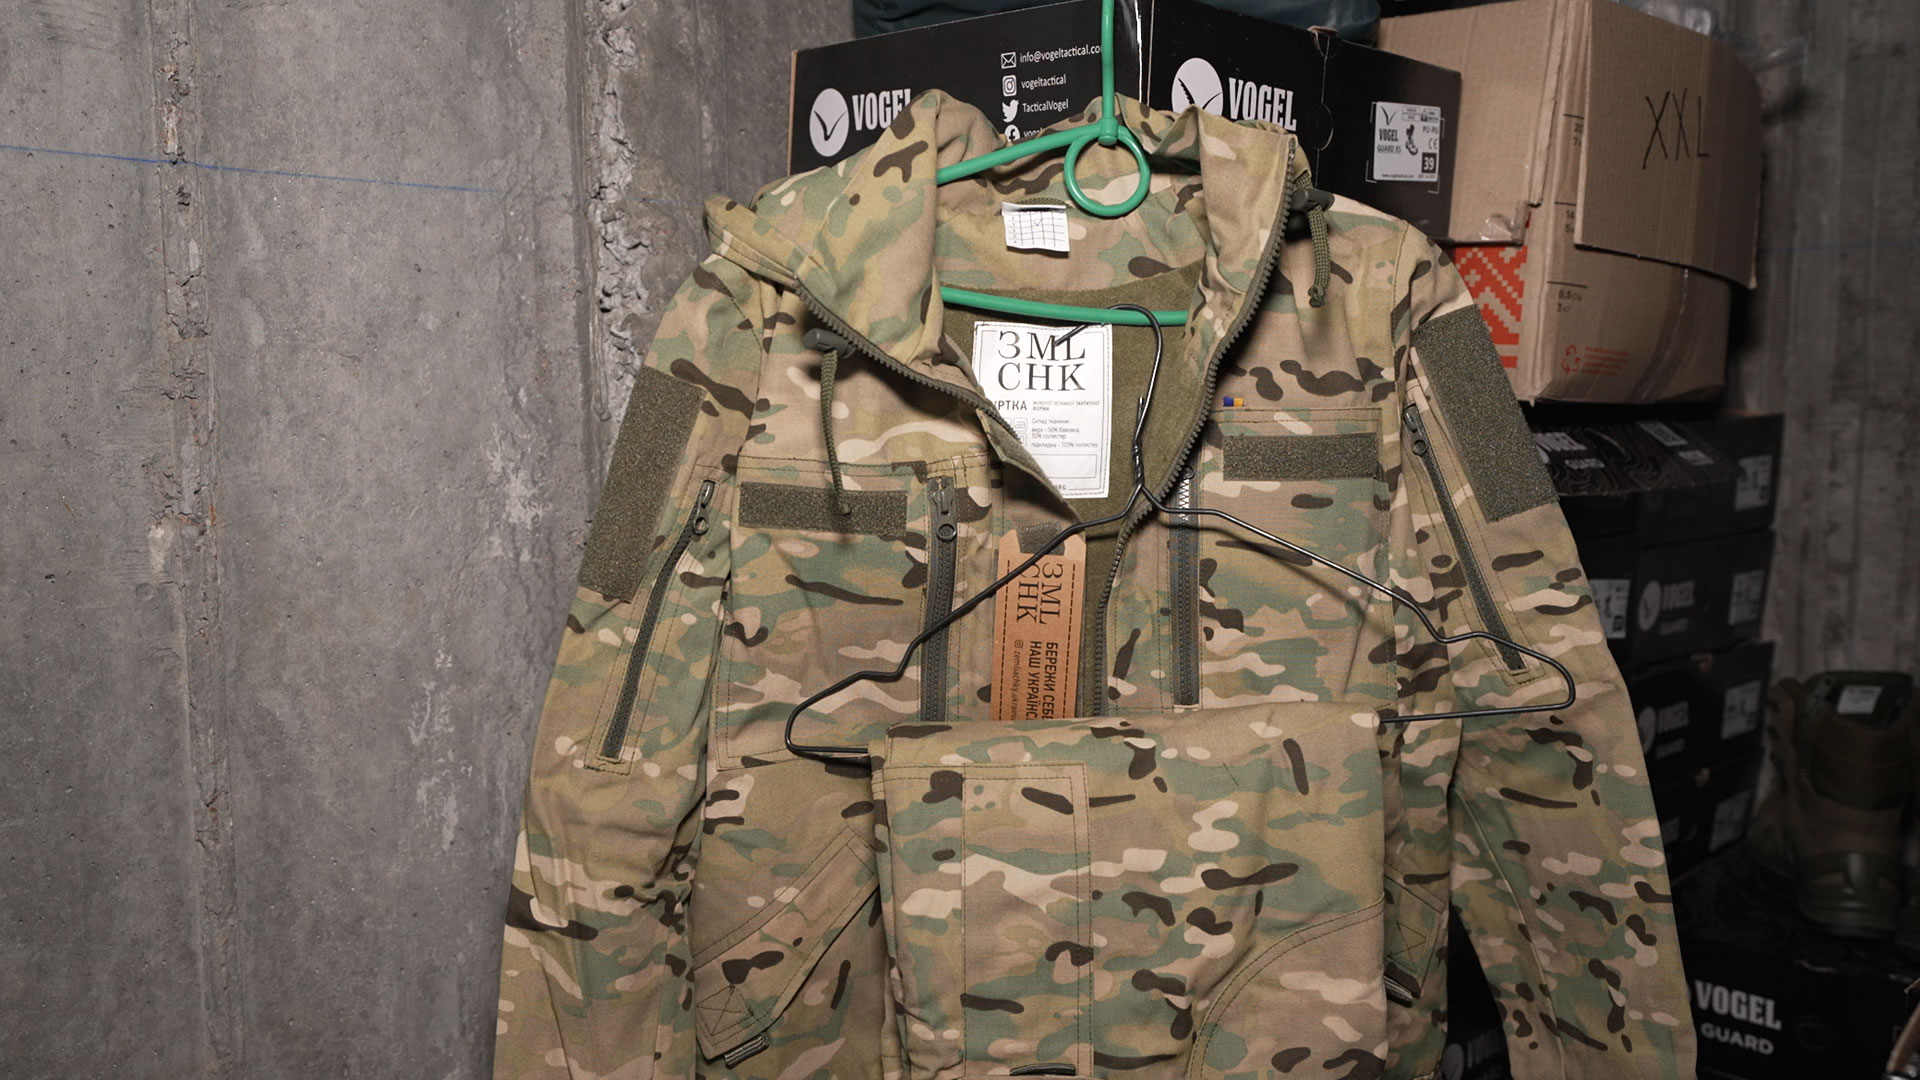 LSM tersebut menyediakan barang-barang vital bagi perempuan di angkatan bersenjata. 